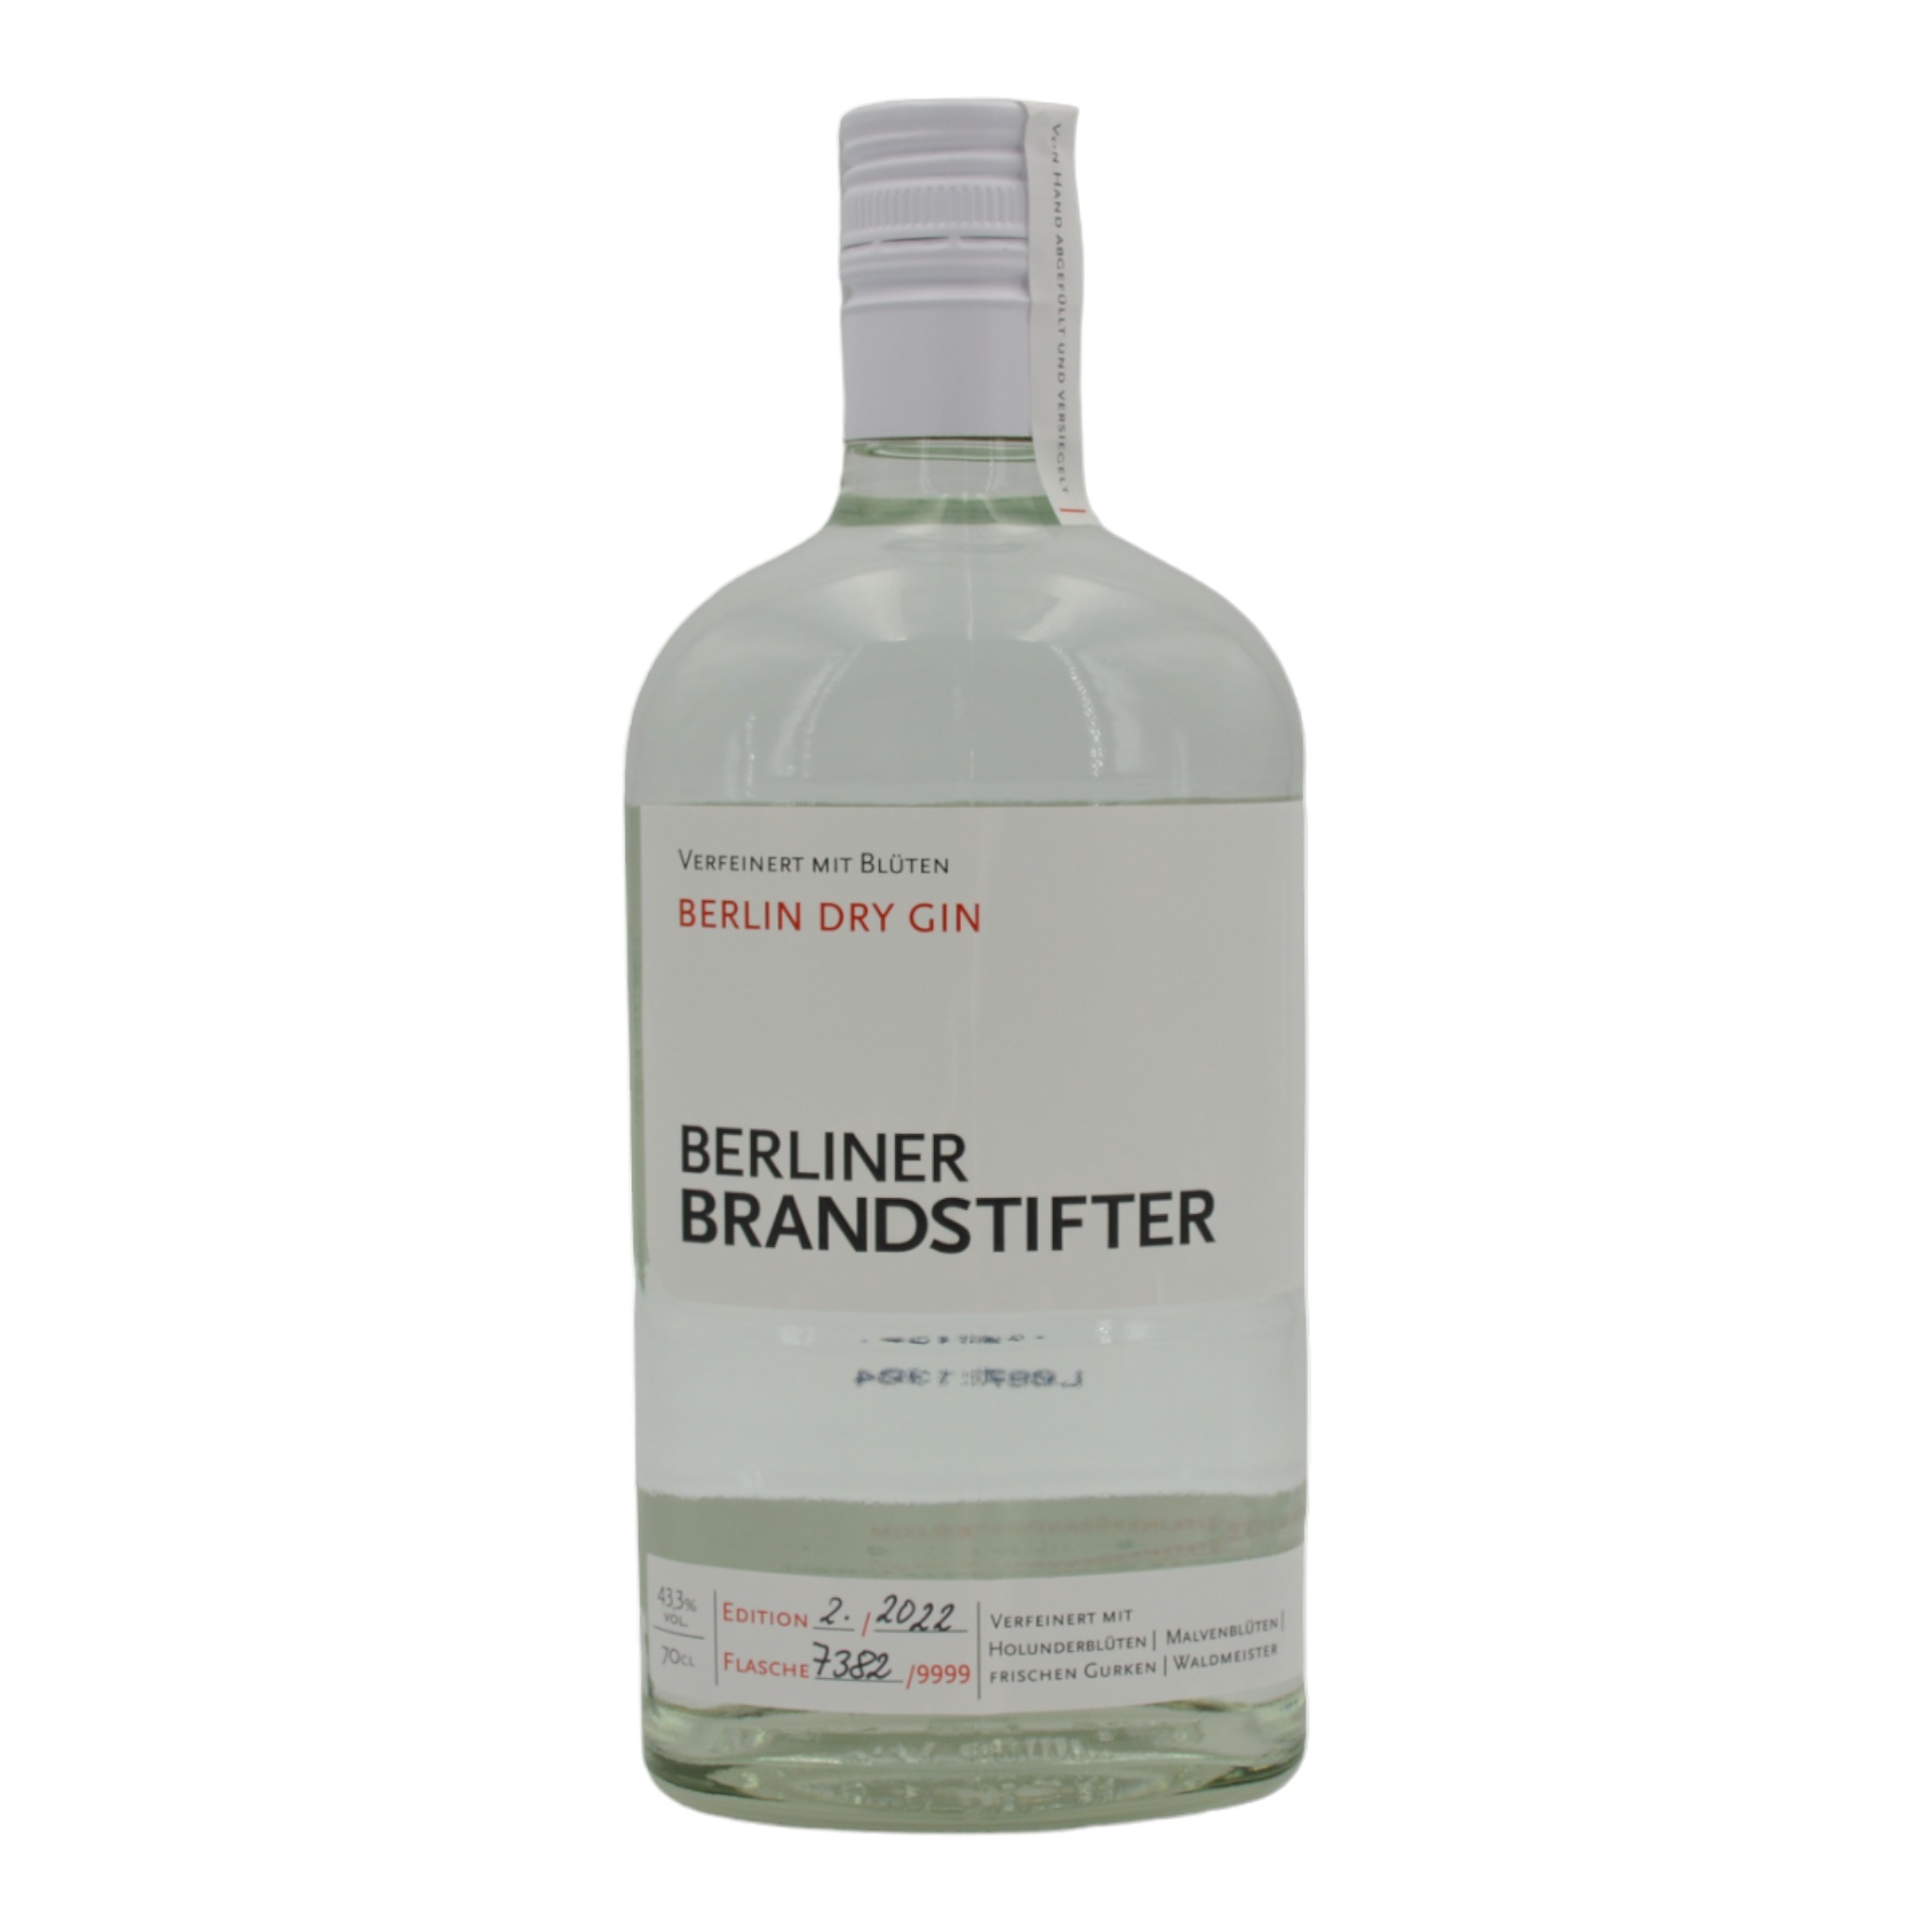 4013228493208Berliner Brandstifter Berlin Dry Gin f1 - Weinhaus-Buecker